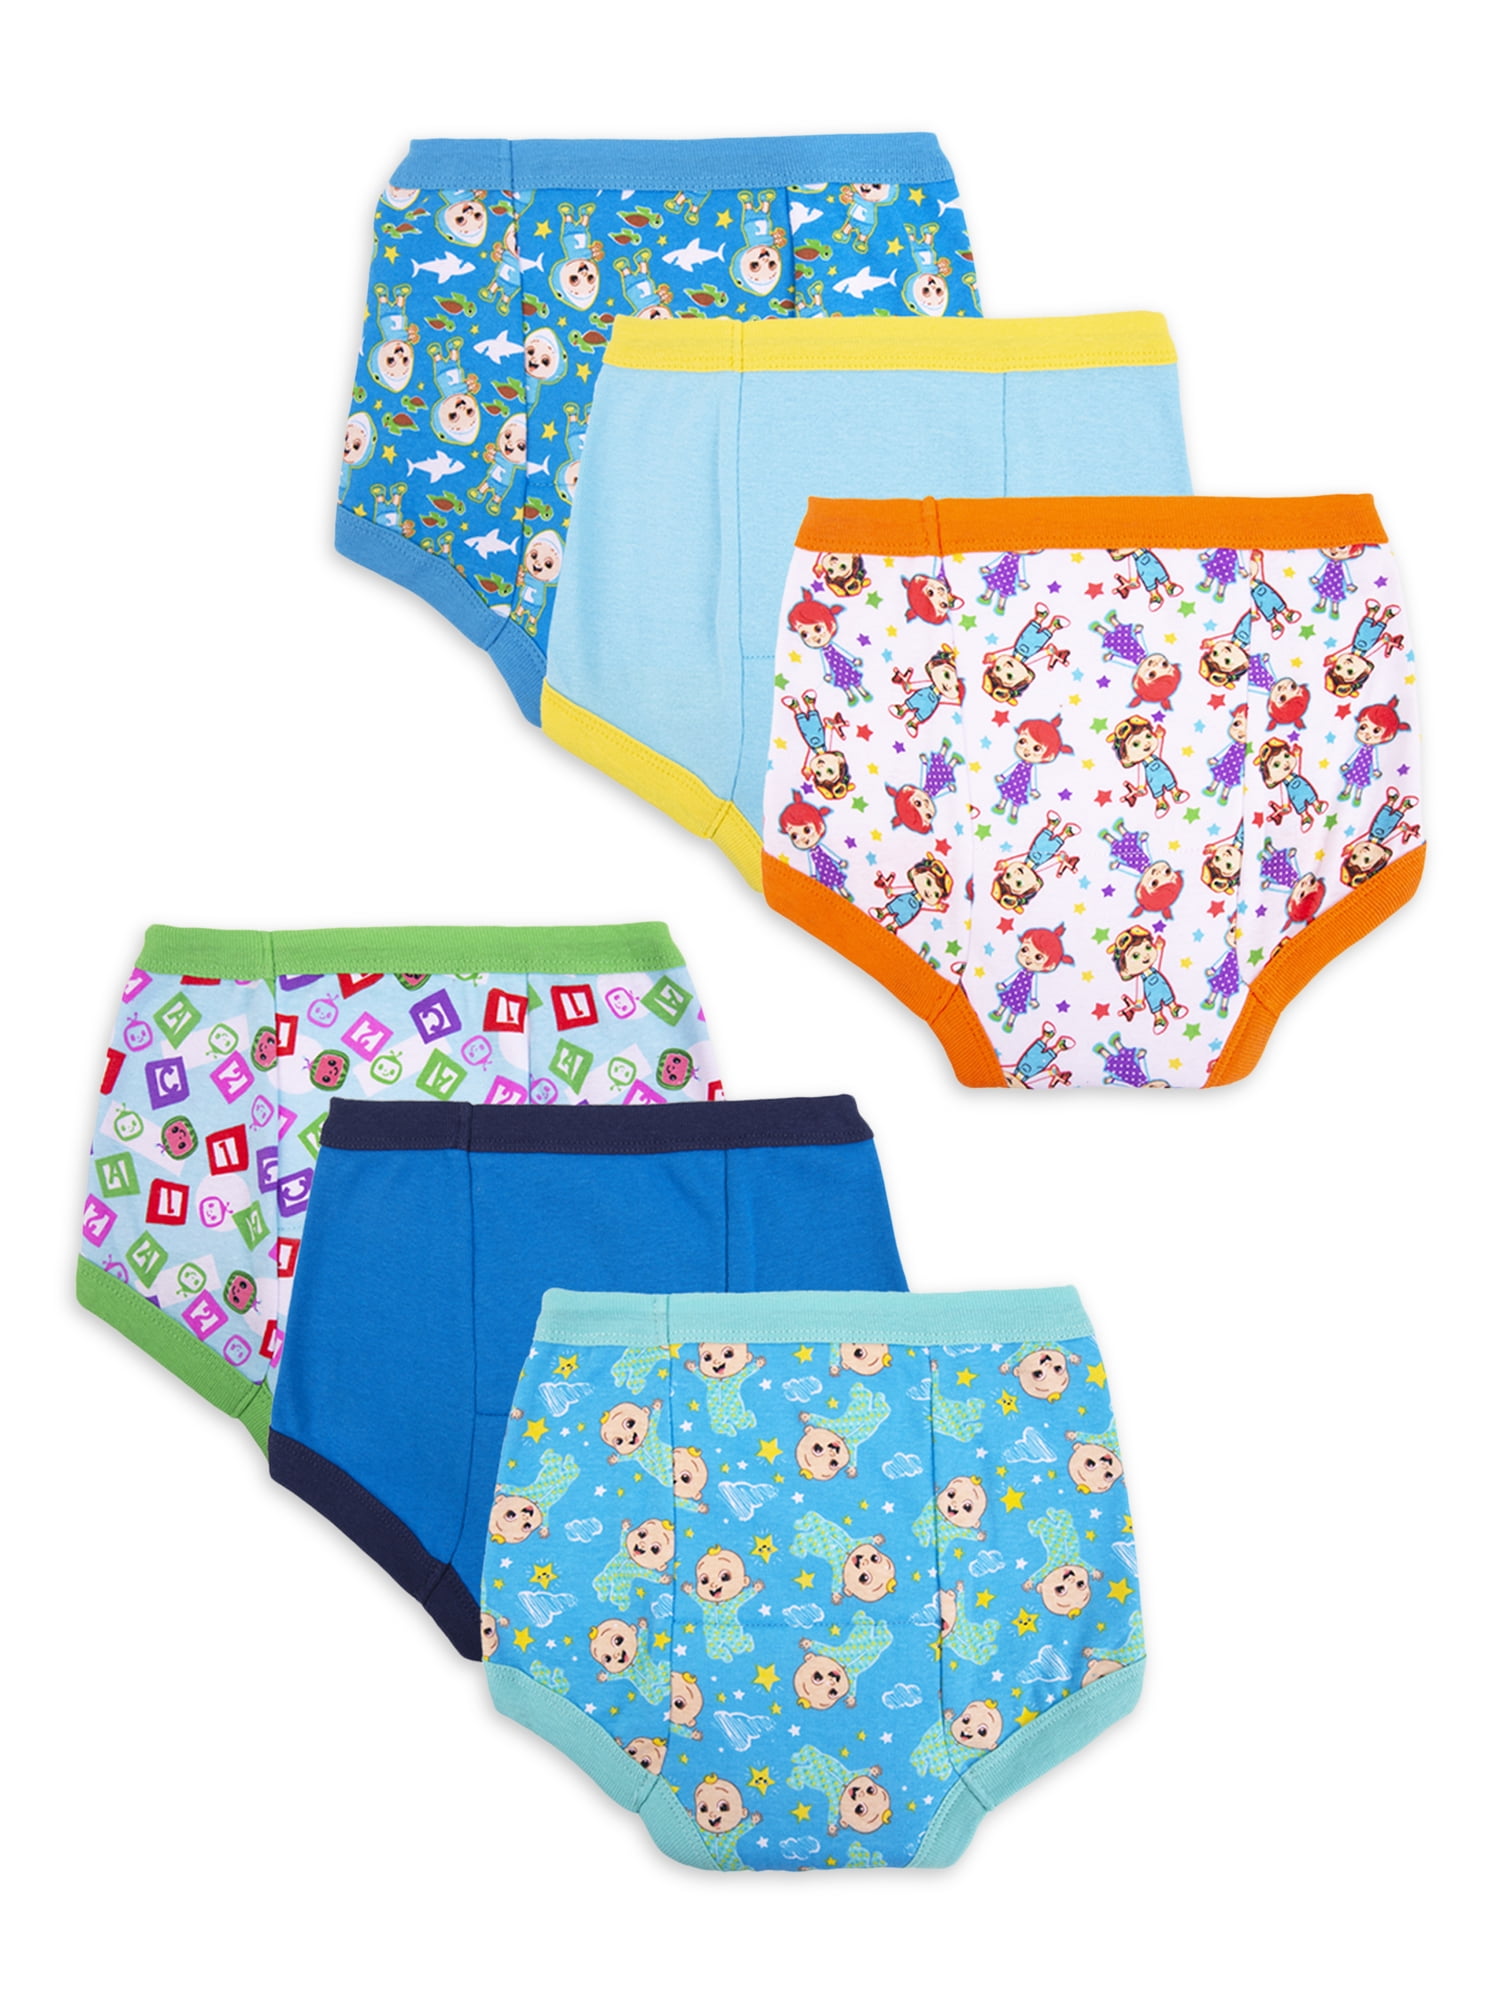 Nickelodeon Cocomelon Toddler Boys Underwear Briefs Sz 4T (6 pack) 